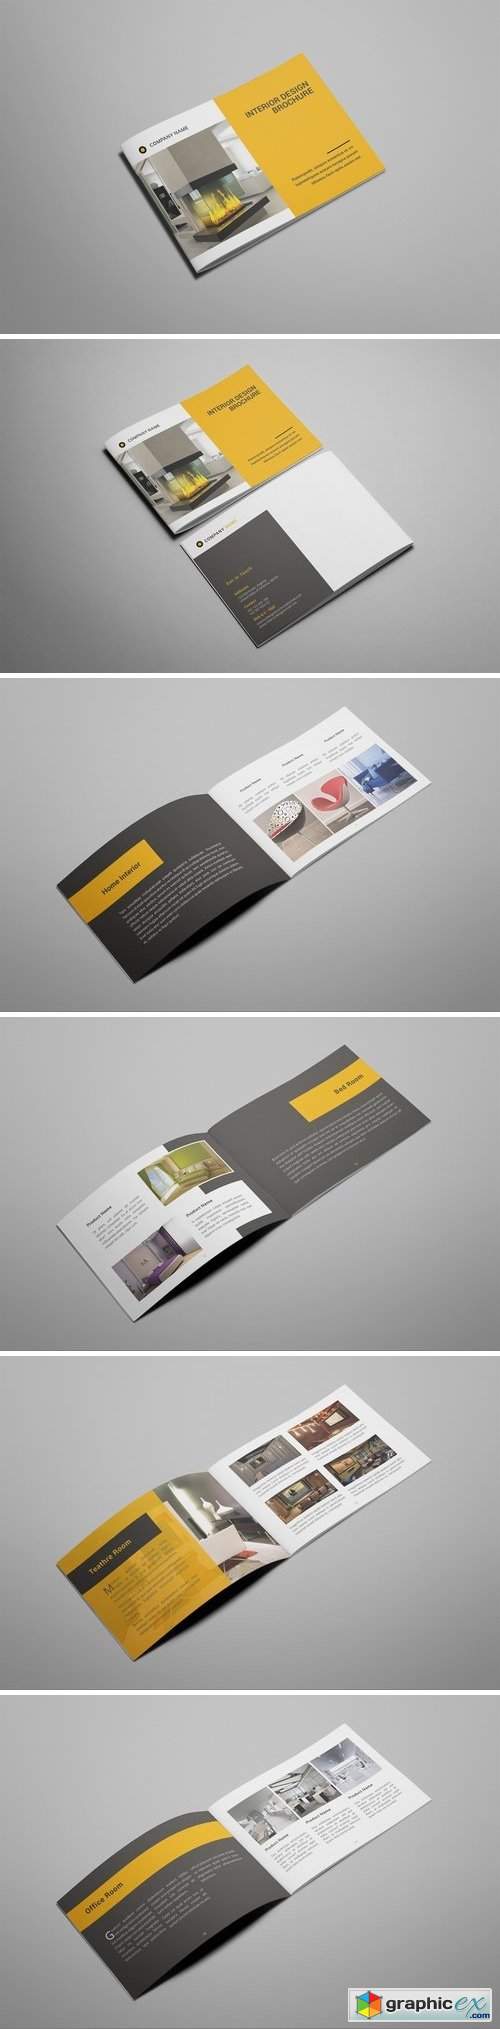 Intersign - Interior Design Brochure